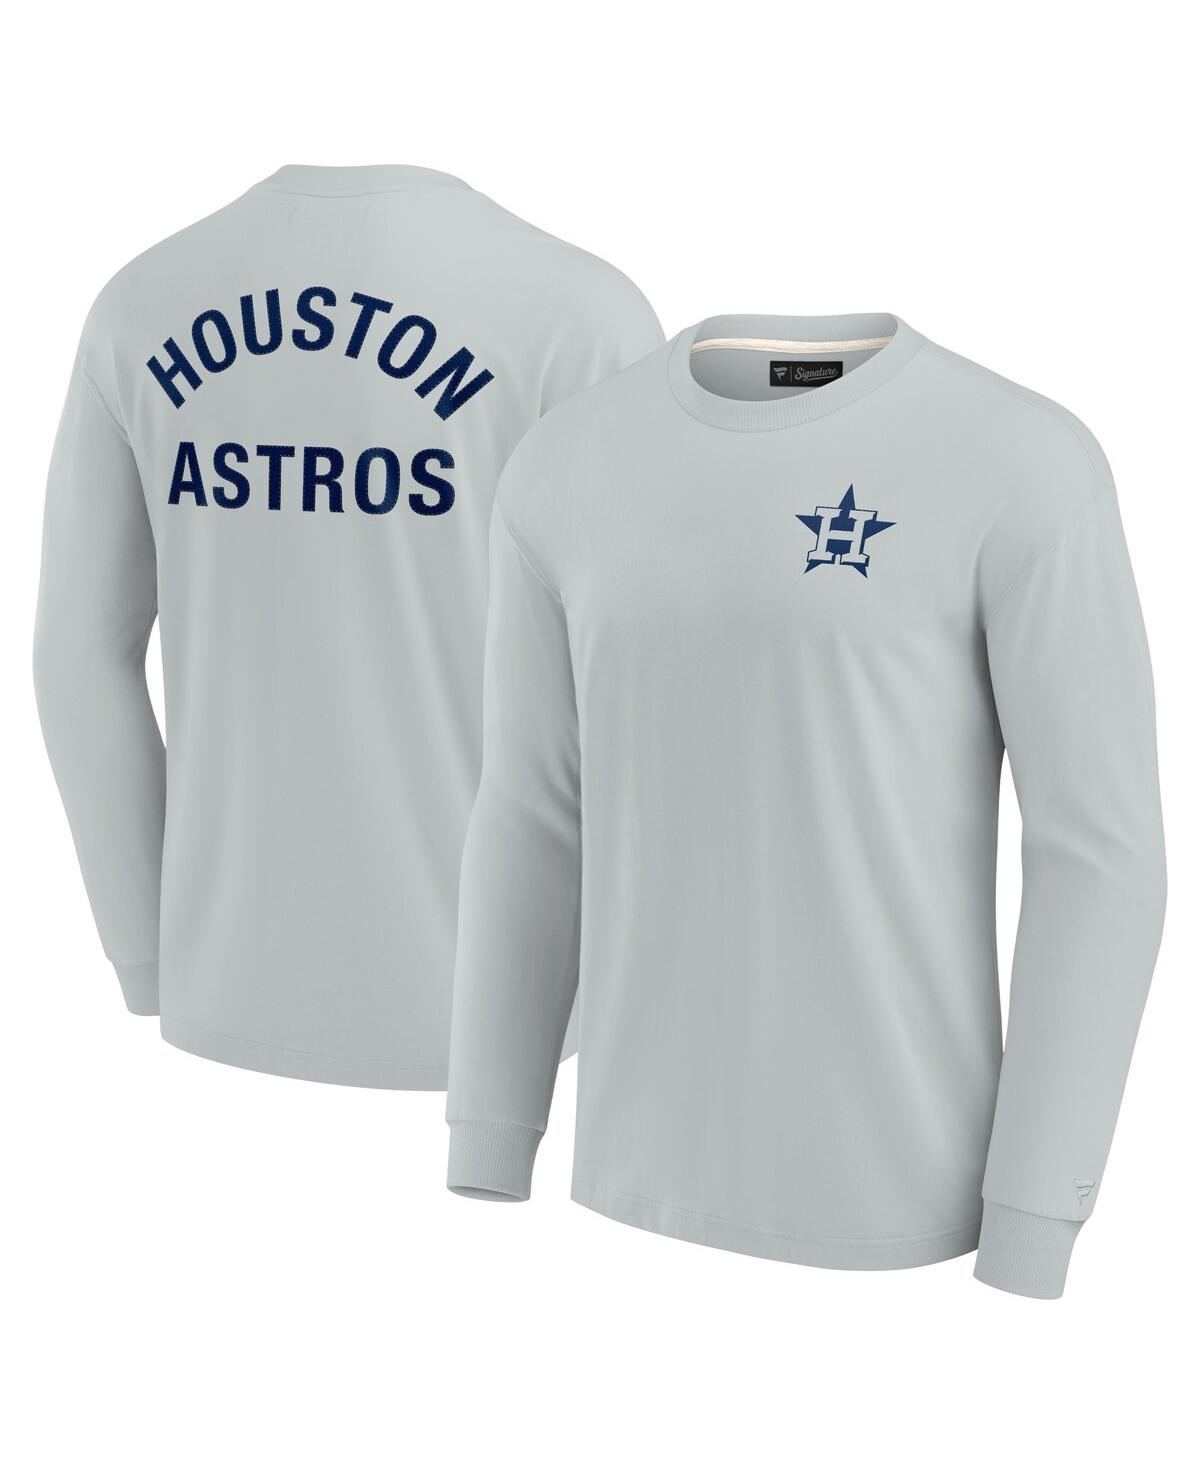 Men's and Women's Fanatics Signature Gray Houston Astros Super Soft Long Sleeve T-shirt - Gray